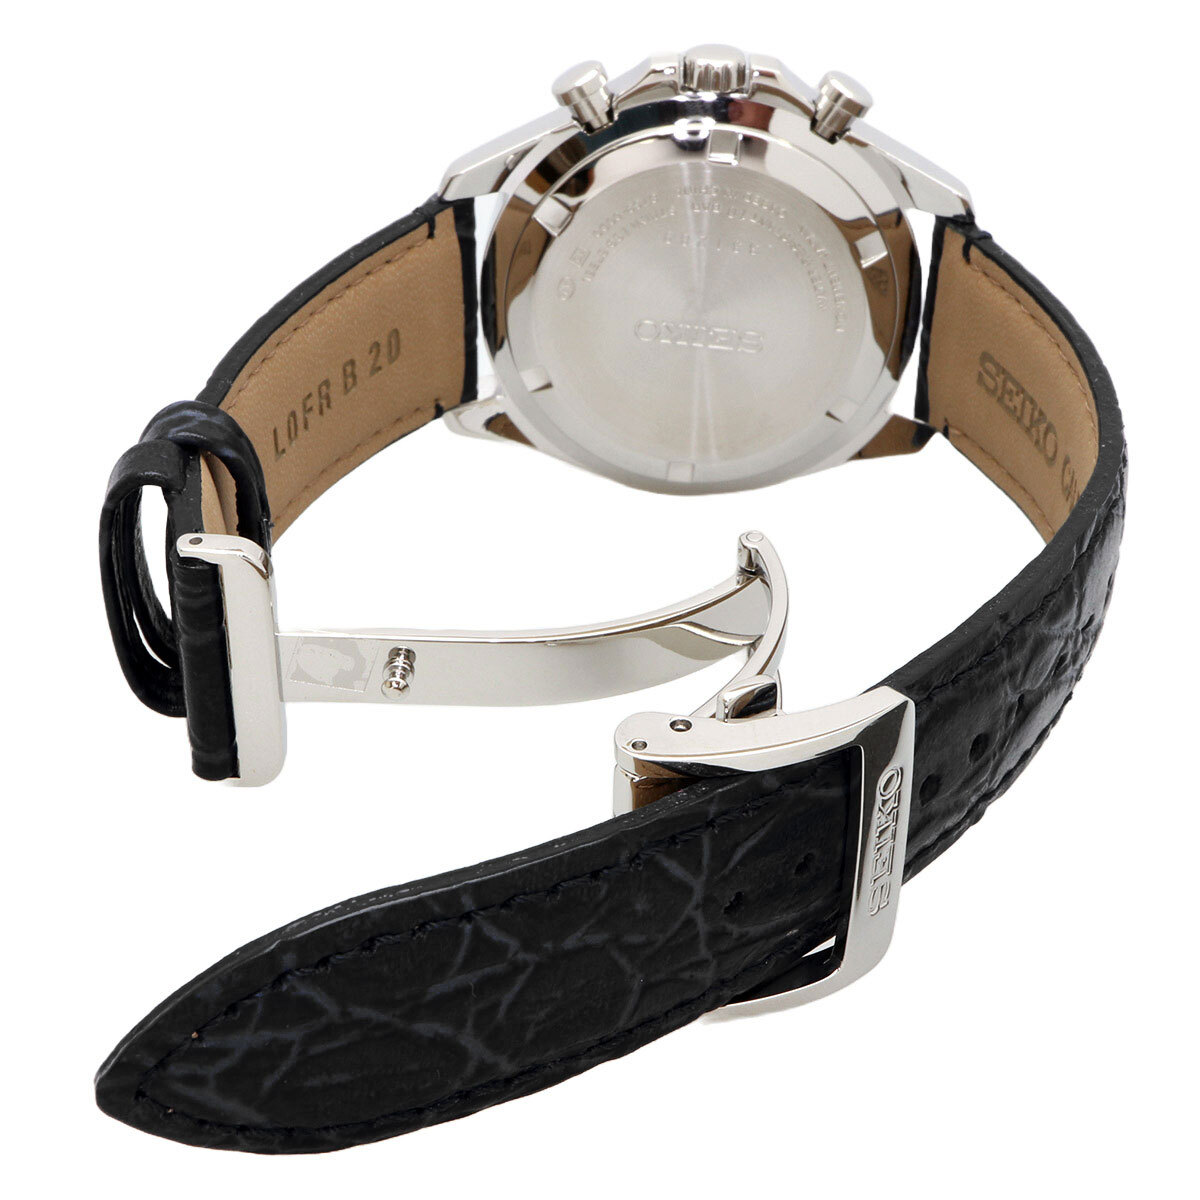 SEIKO Seiko wristwatch men's domestic regular goods Seiko selection quartz 8T chronograph business SBTR021